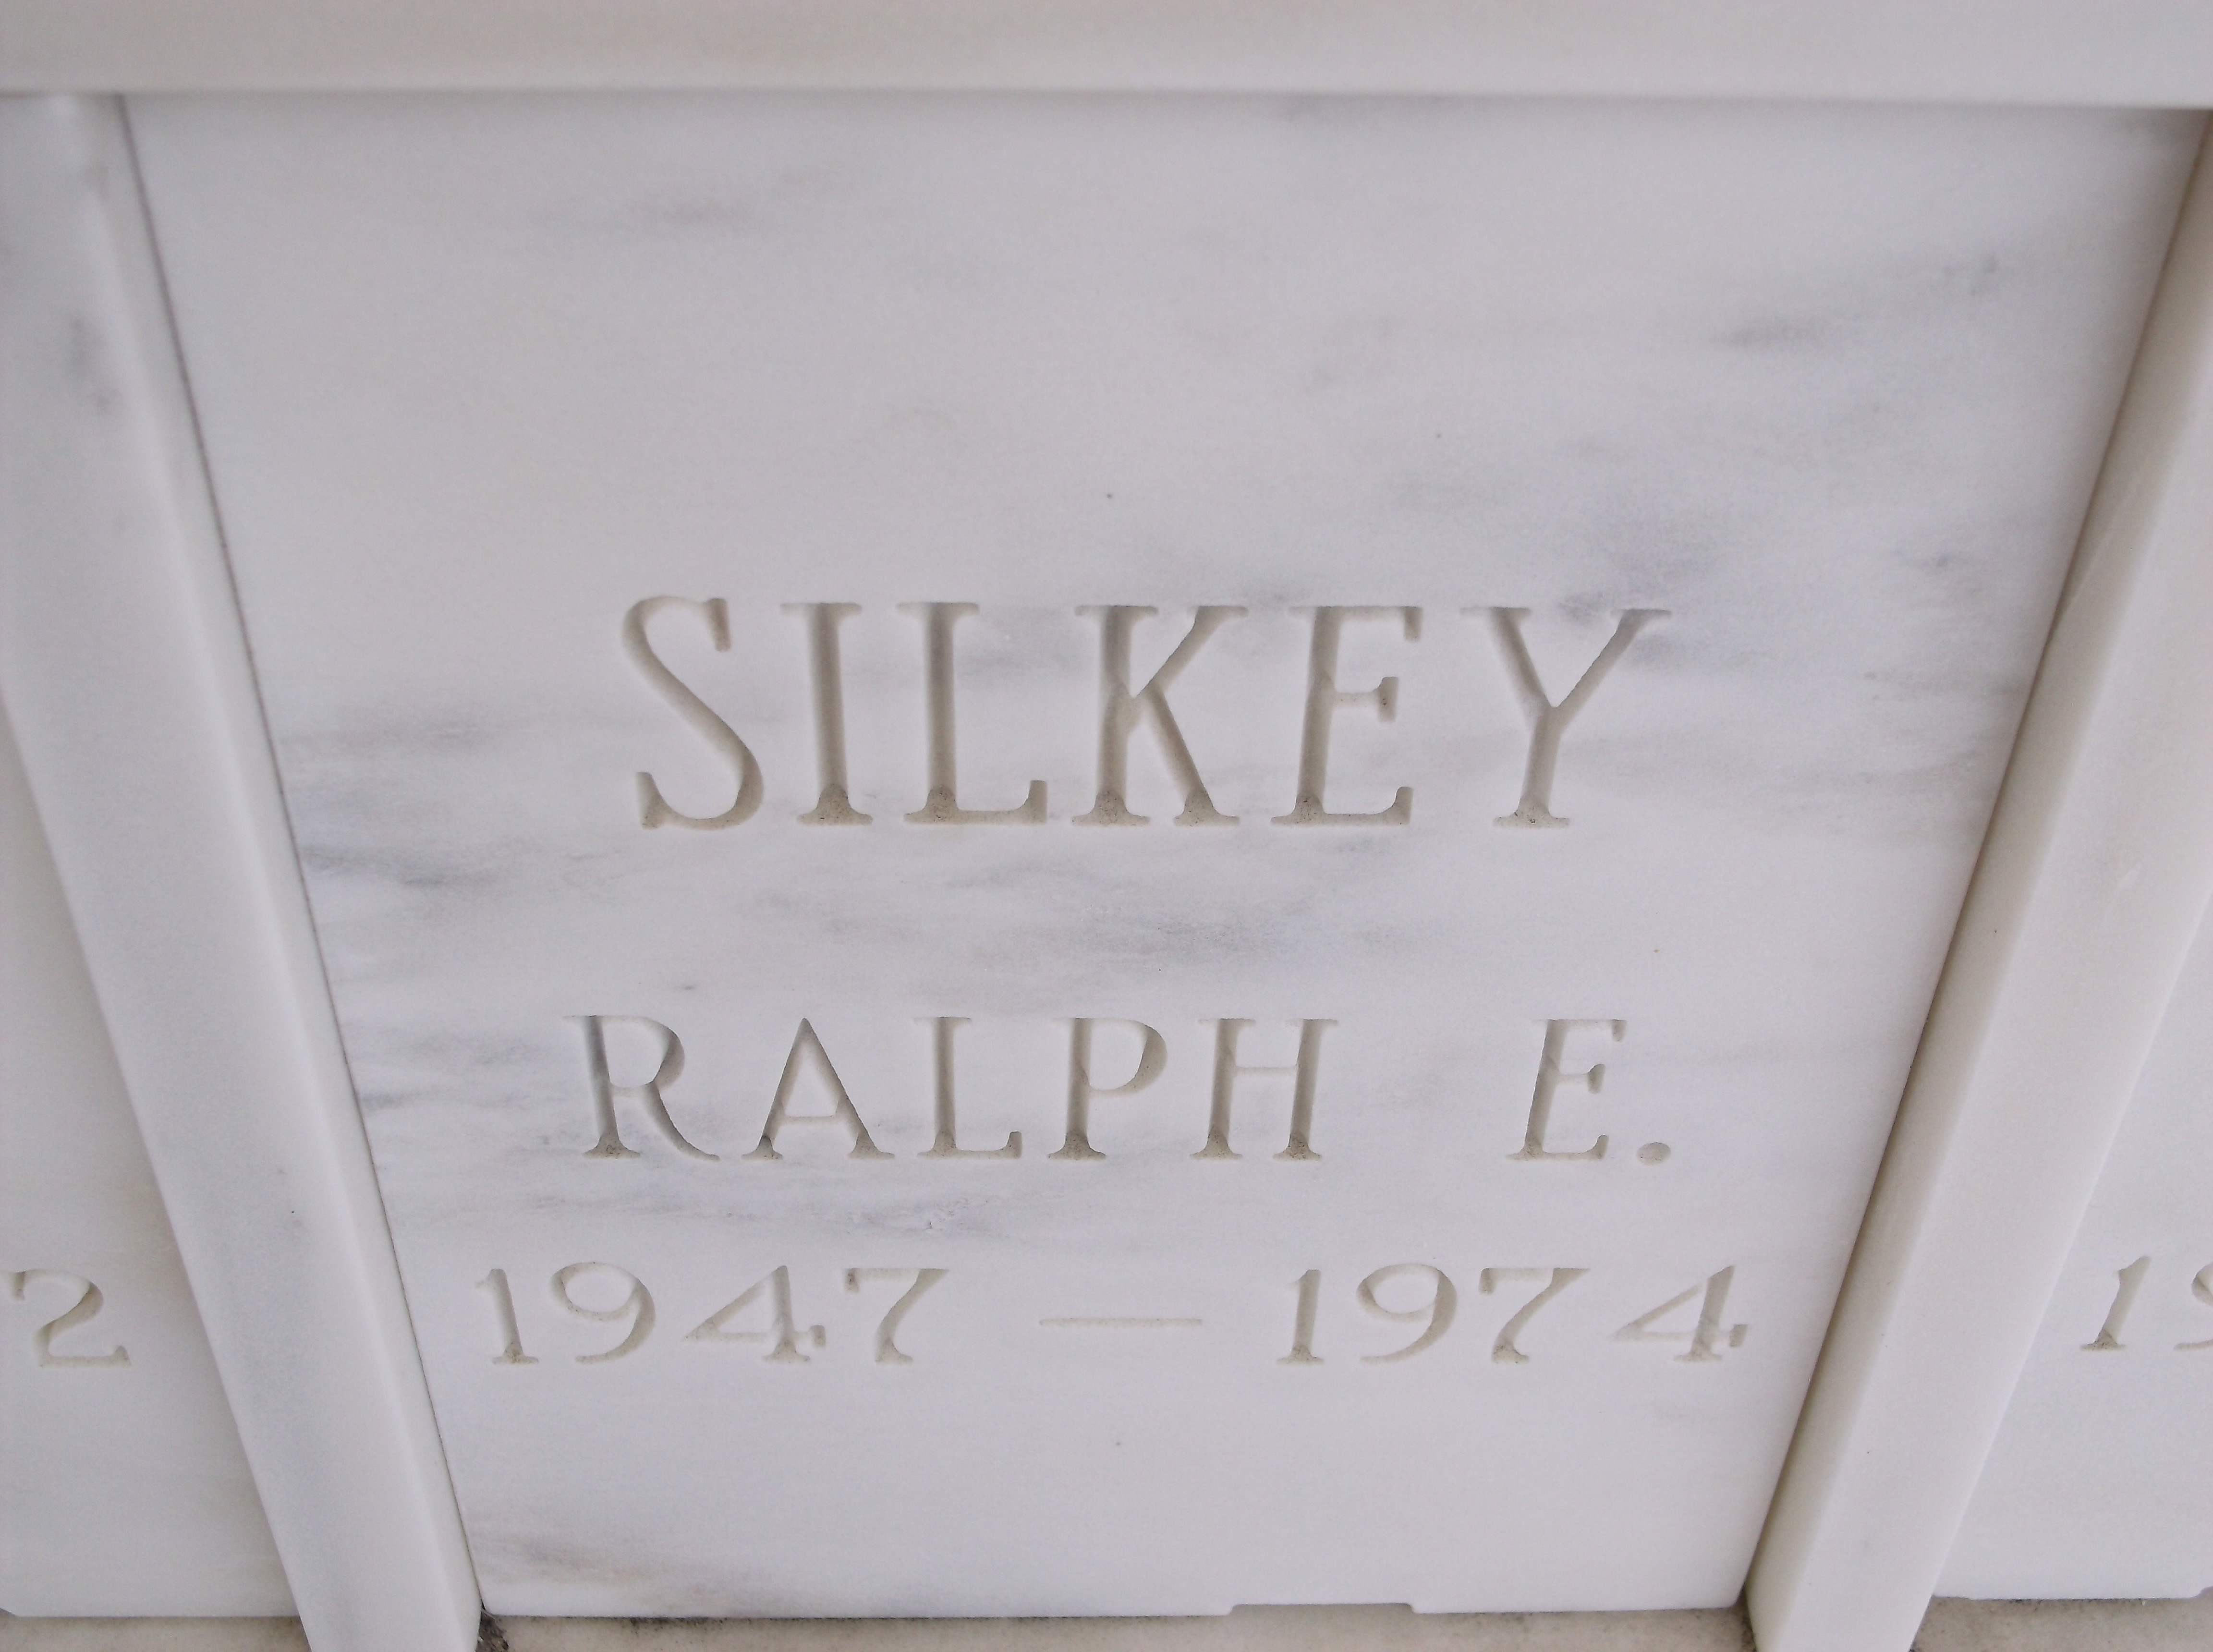 Ralph E Silkey